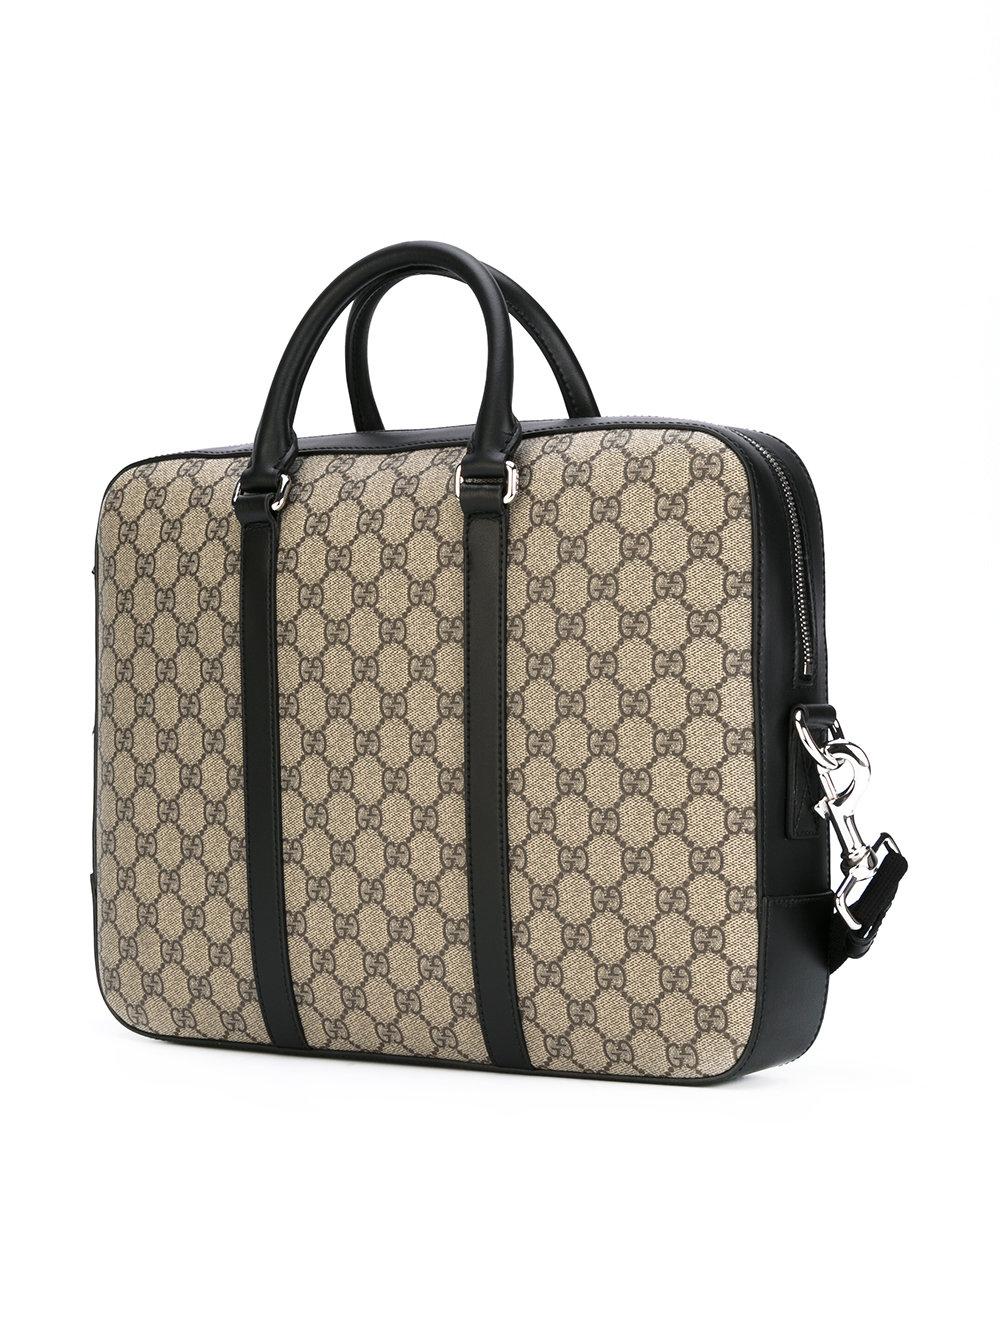 Gucci Gg Supreme Laptop Case, ModeSens